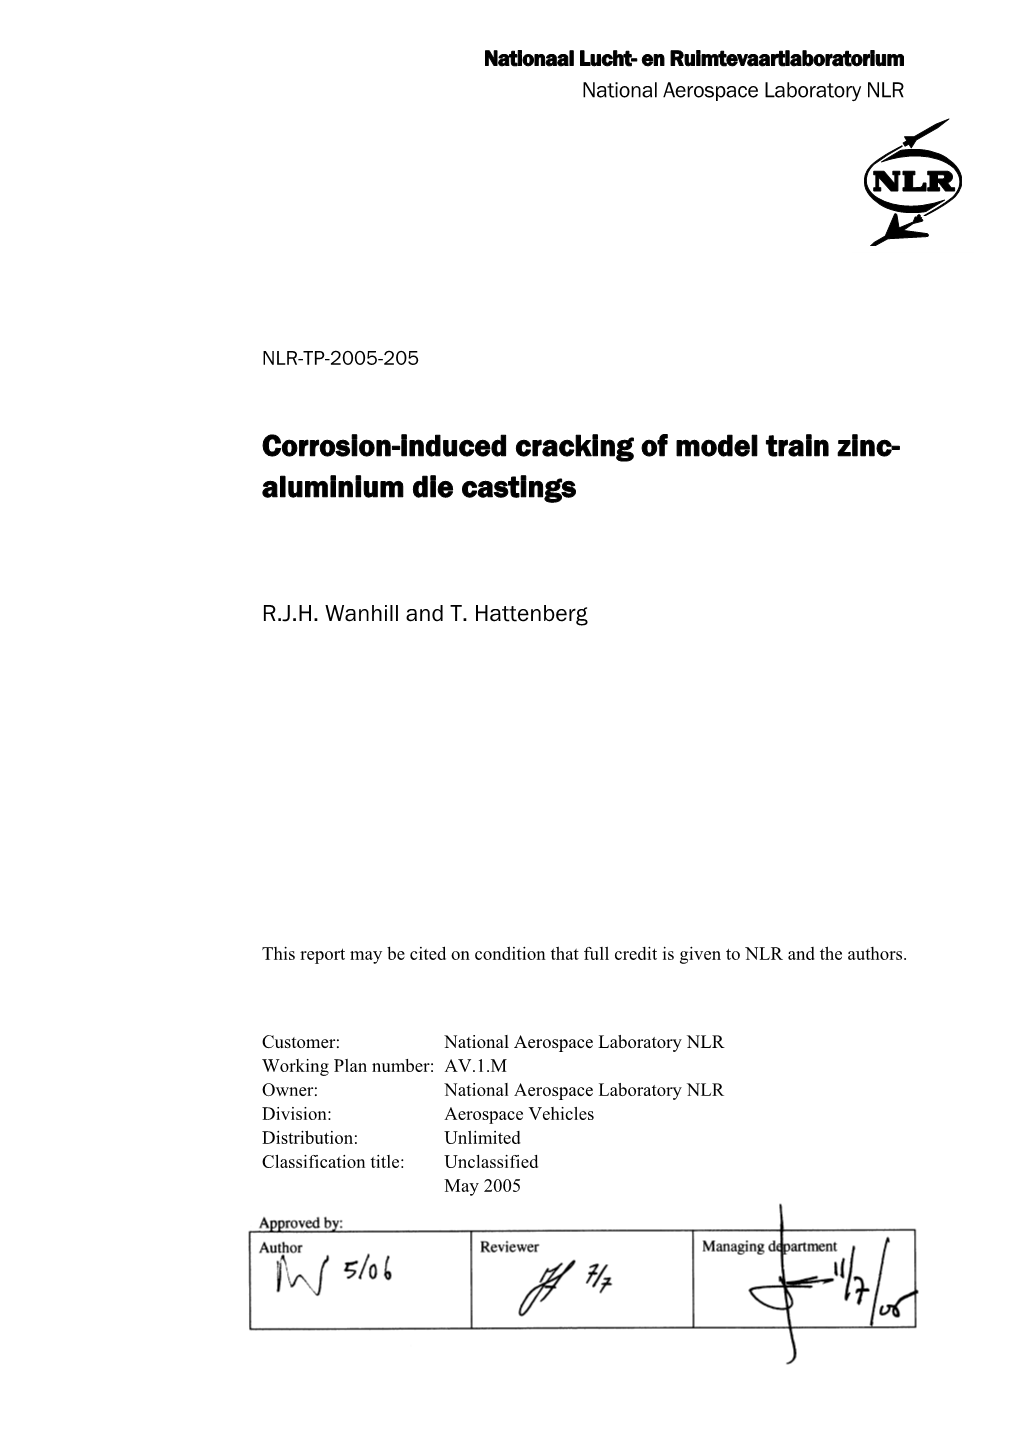 Corrosion-Induced Cracking of Model Train Zinc- Aluminium Die Castings